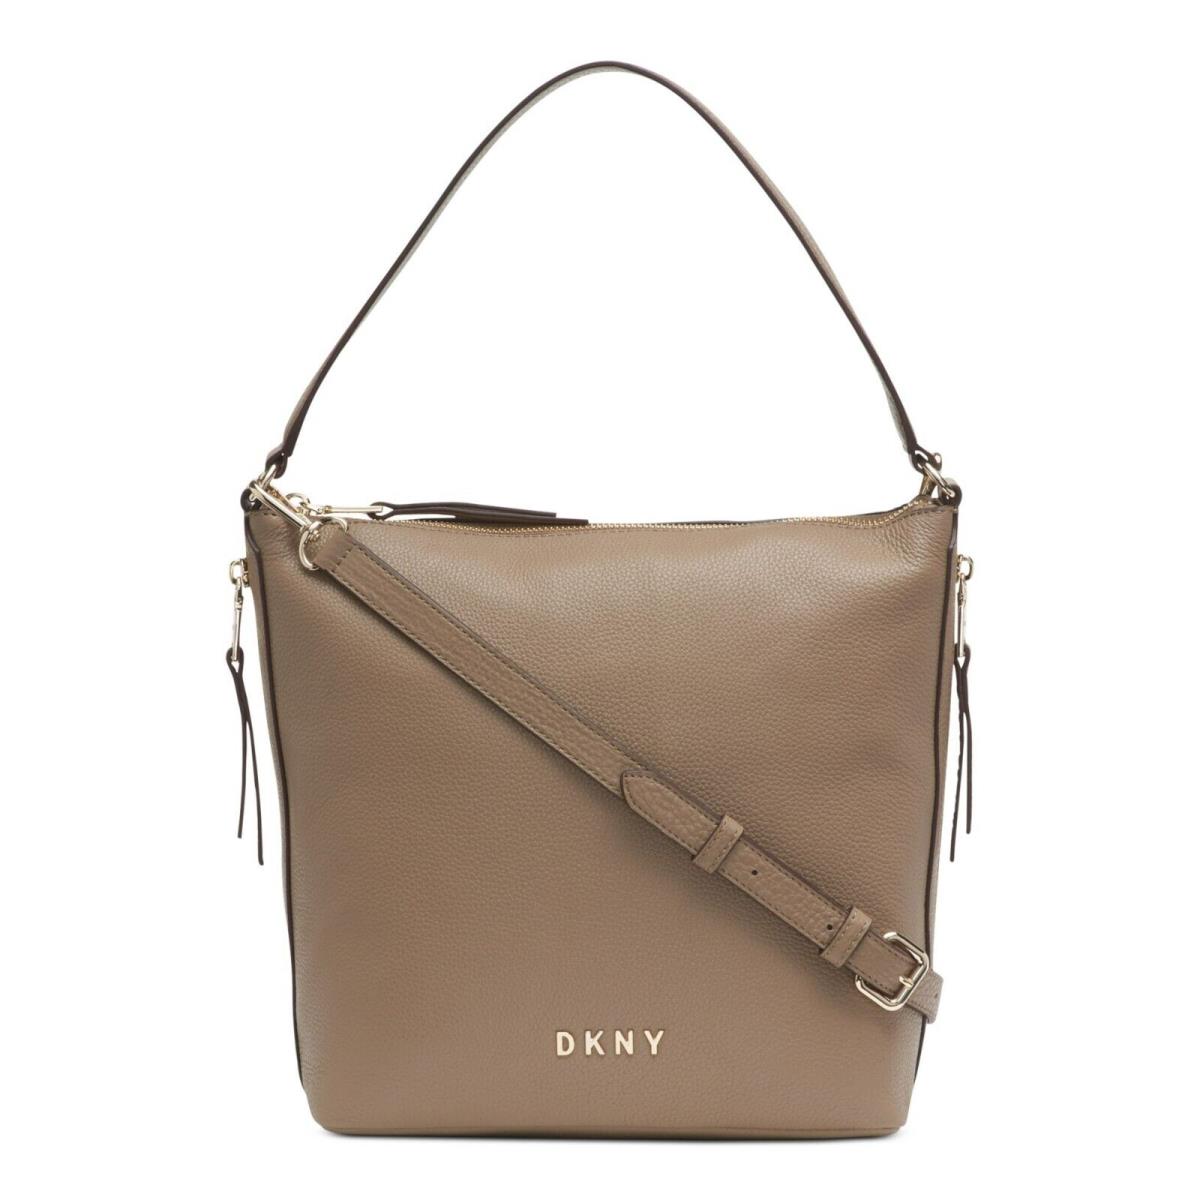 Dkny Leather Purse Hobo Shoulder Bag Tote Crossbody Womens Large Handbag - Beige Lining, Beige Exterior, Gold Hardware